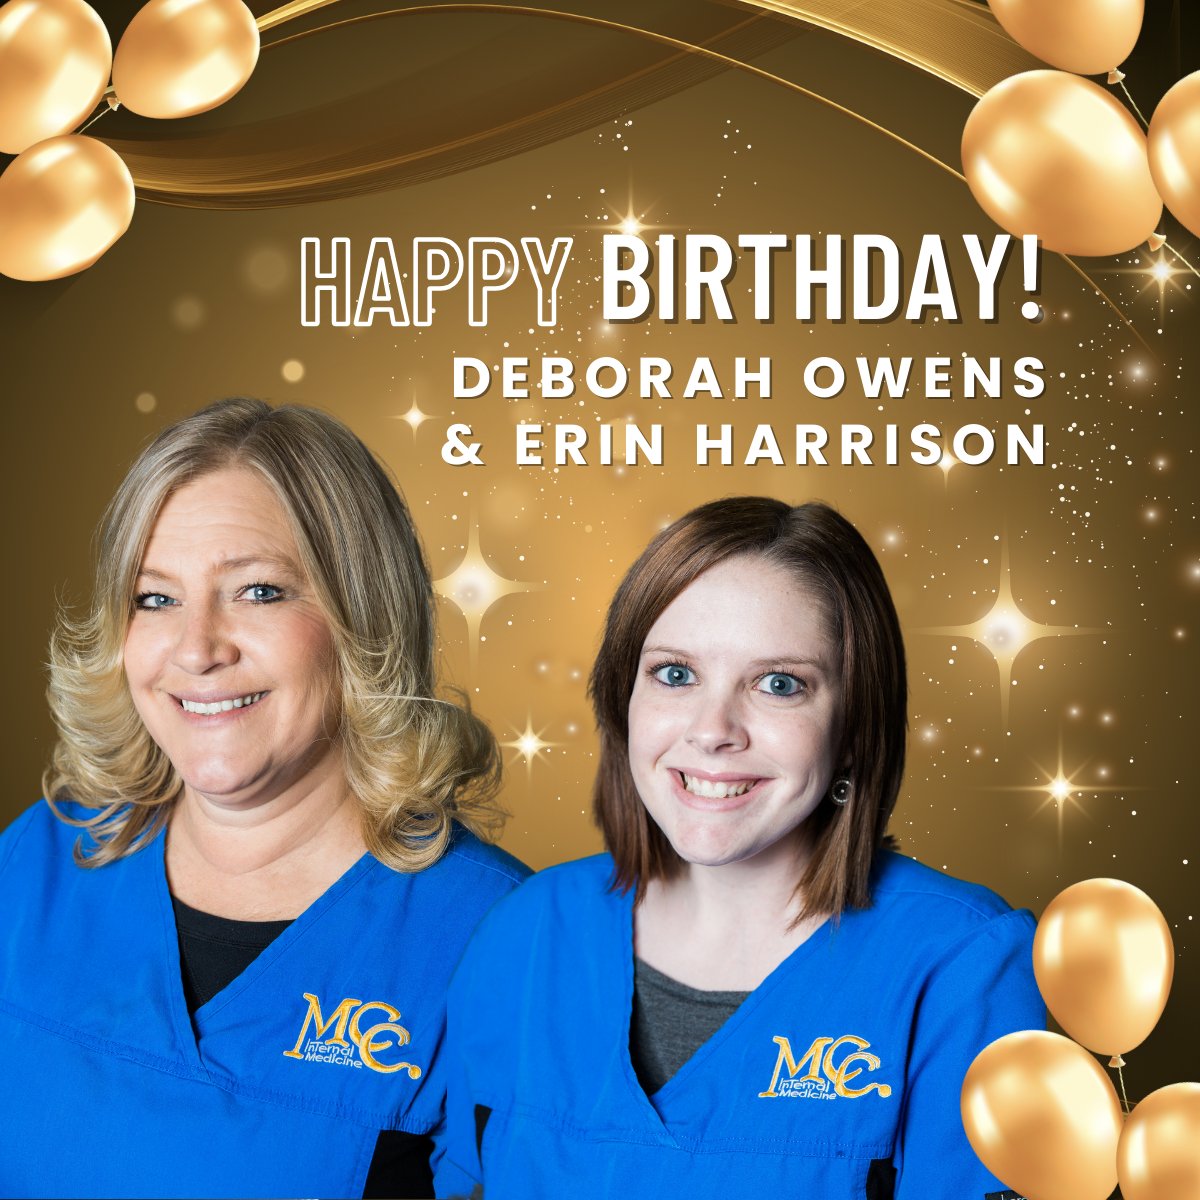 Happy Birthday Erin Harrison & Deborah Owens!! 🎂🎂

#HappyBirthday #MCCInternalMedicine #internalmedicine #healthcare #doctors #middlegeorgia #maconga #physicians